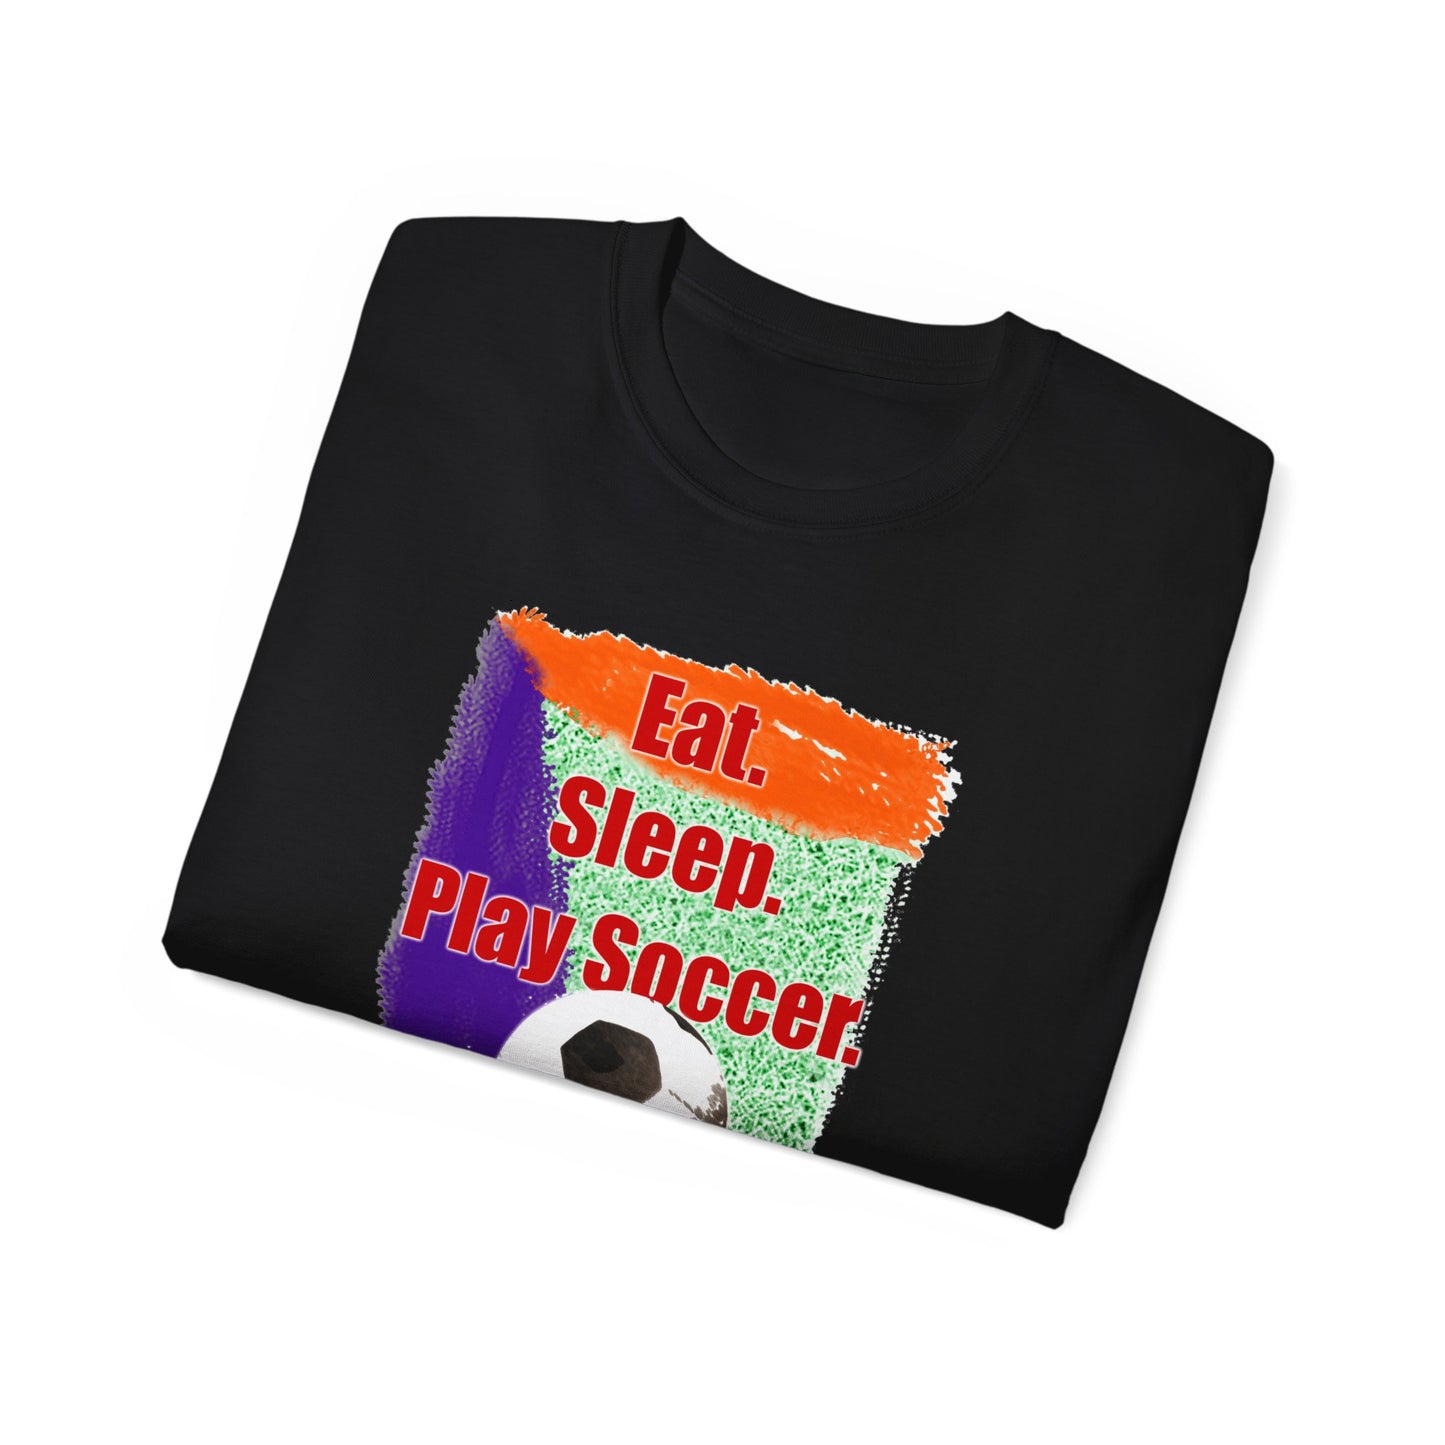 Eat Sleep Play Soccer, Eating and Sleeping Optional, Funny Full Color Vibrant Print Soccer T-Shirt, baseball gift, baseball t-shirt, tee